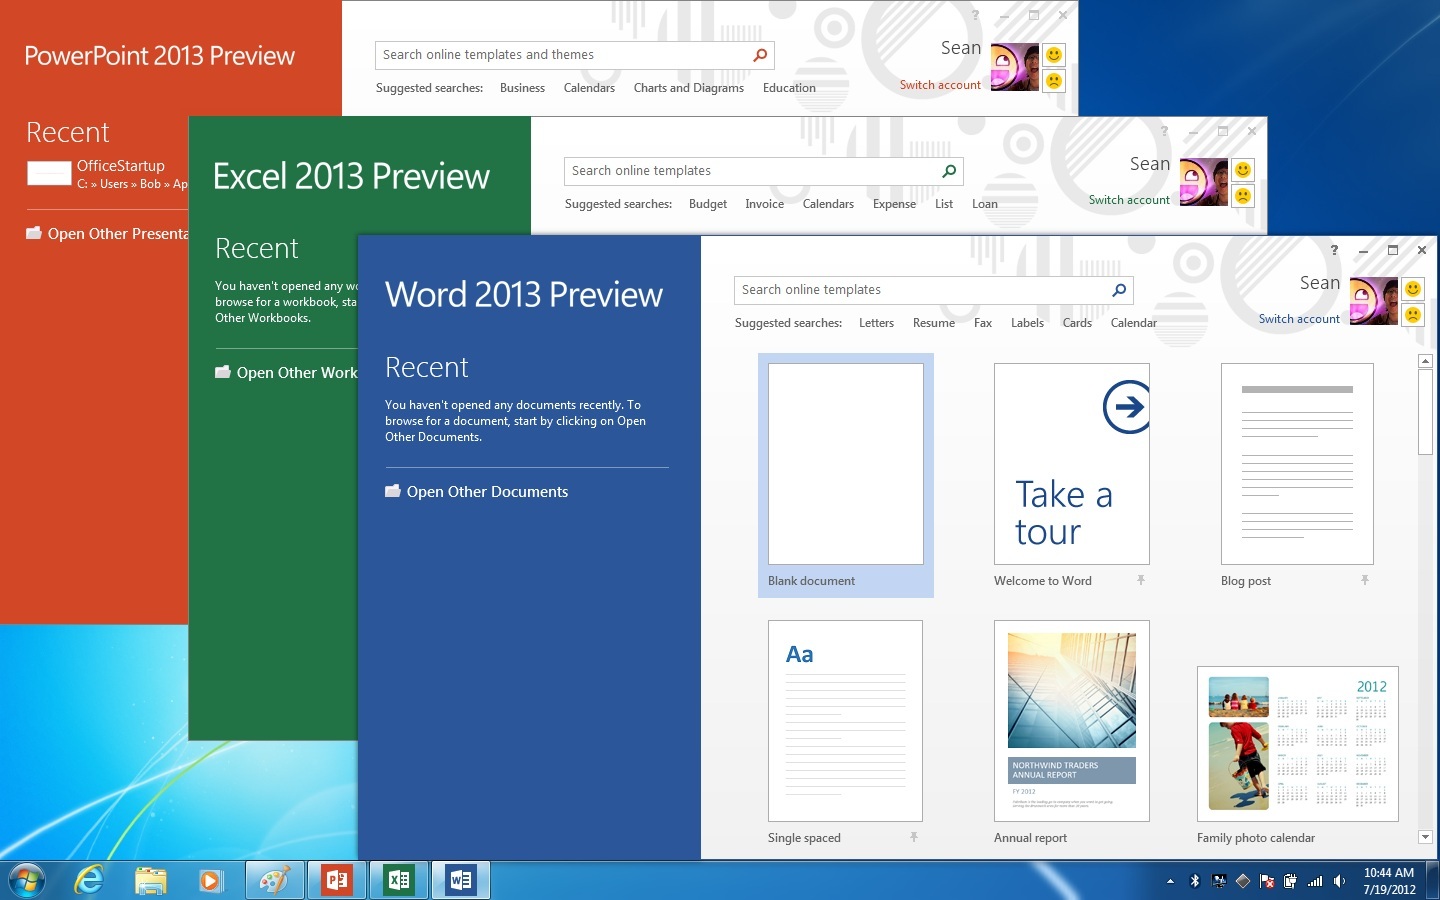 Microsoft Office Suite